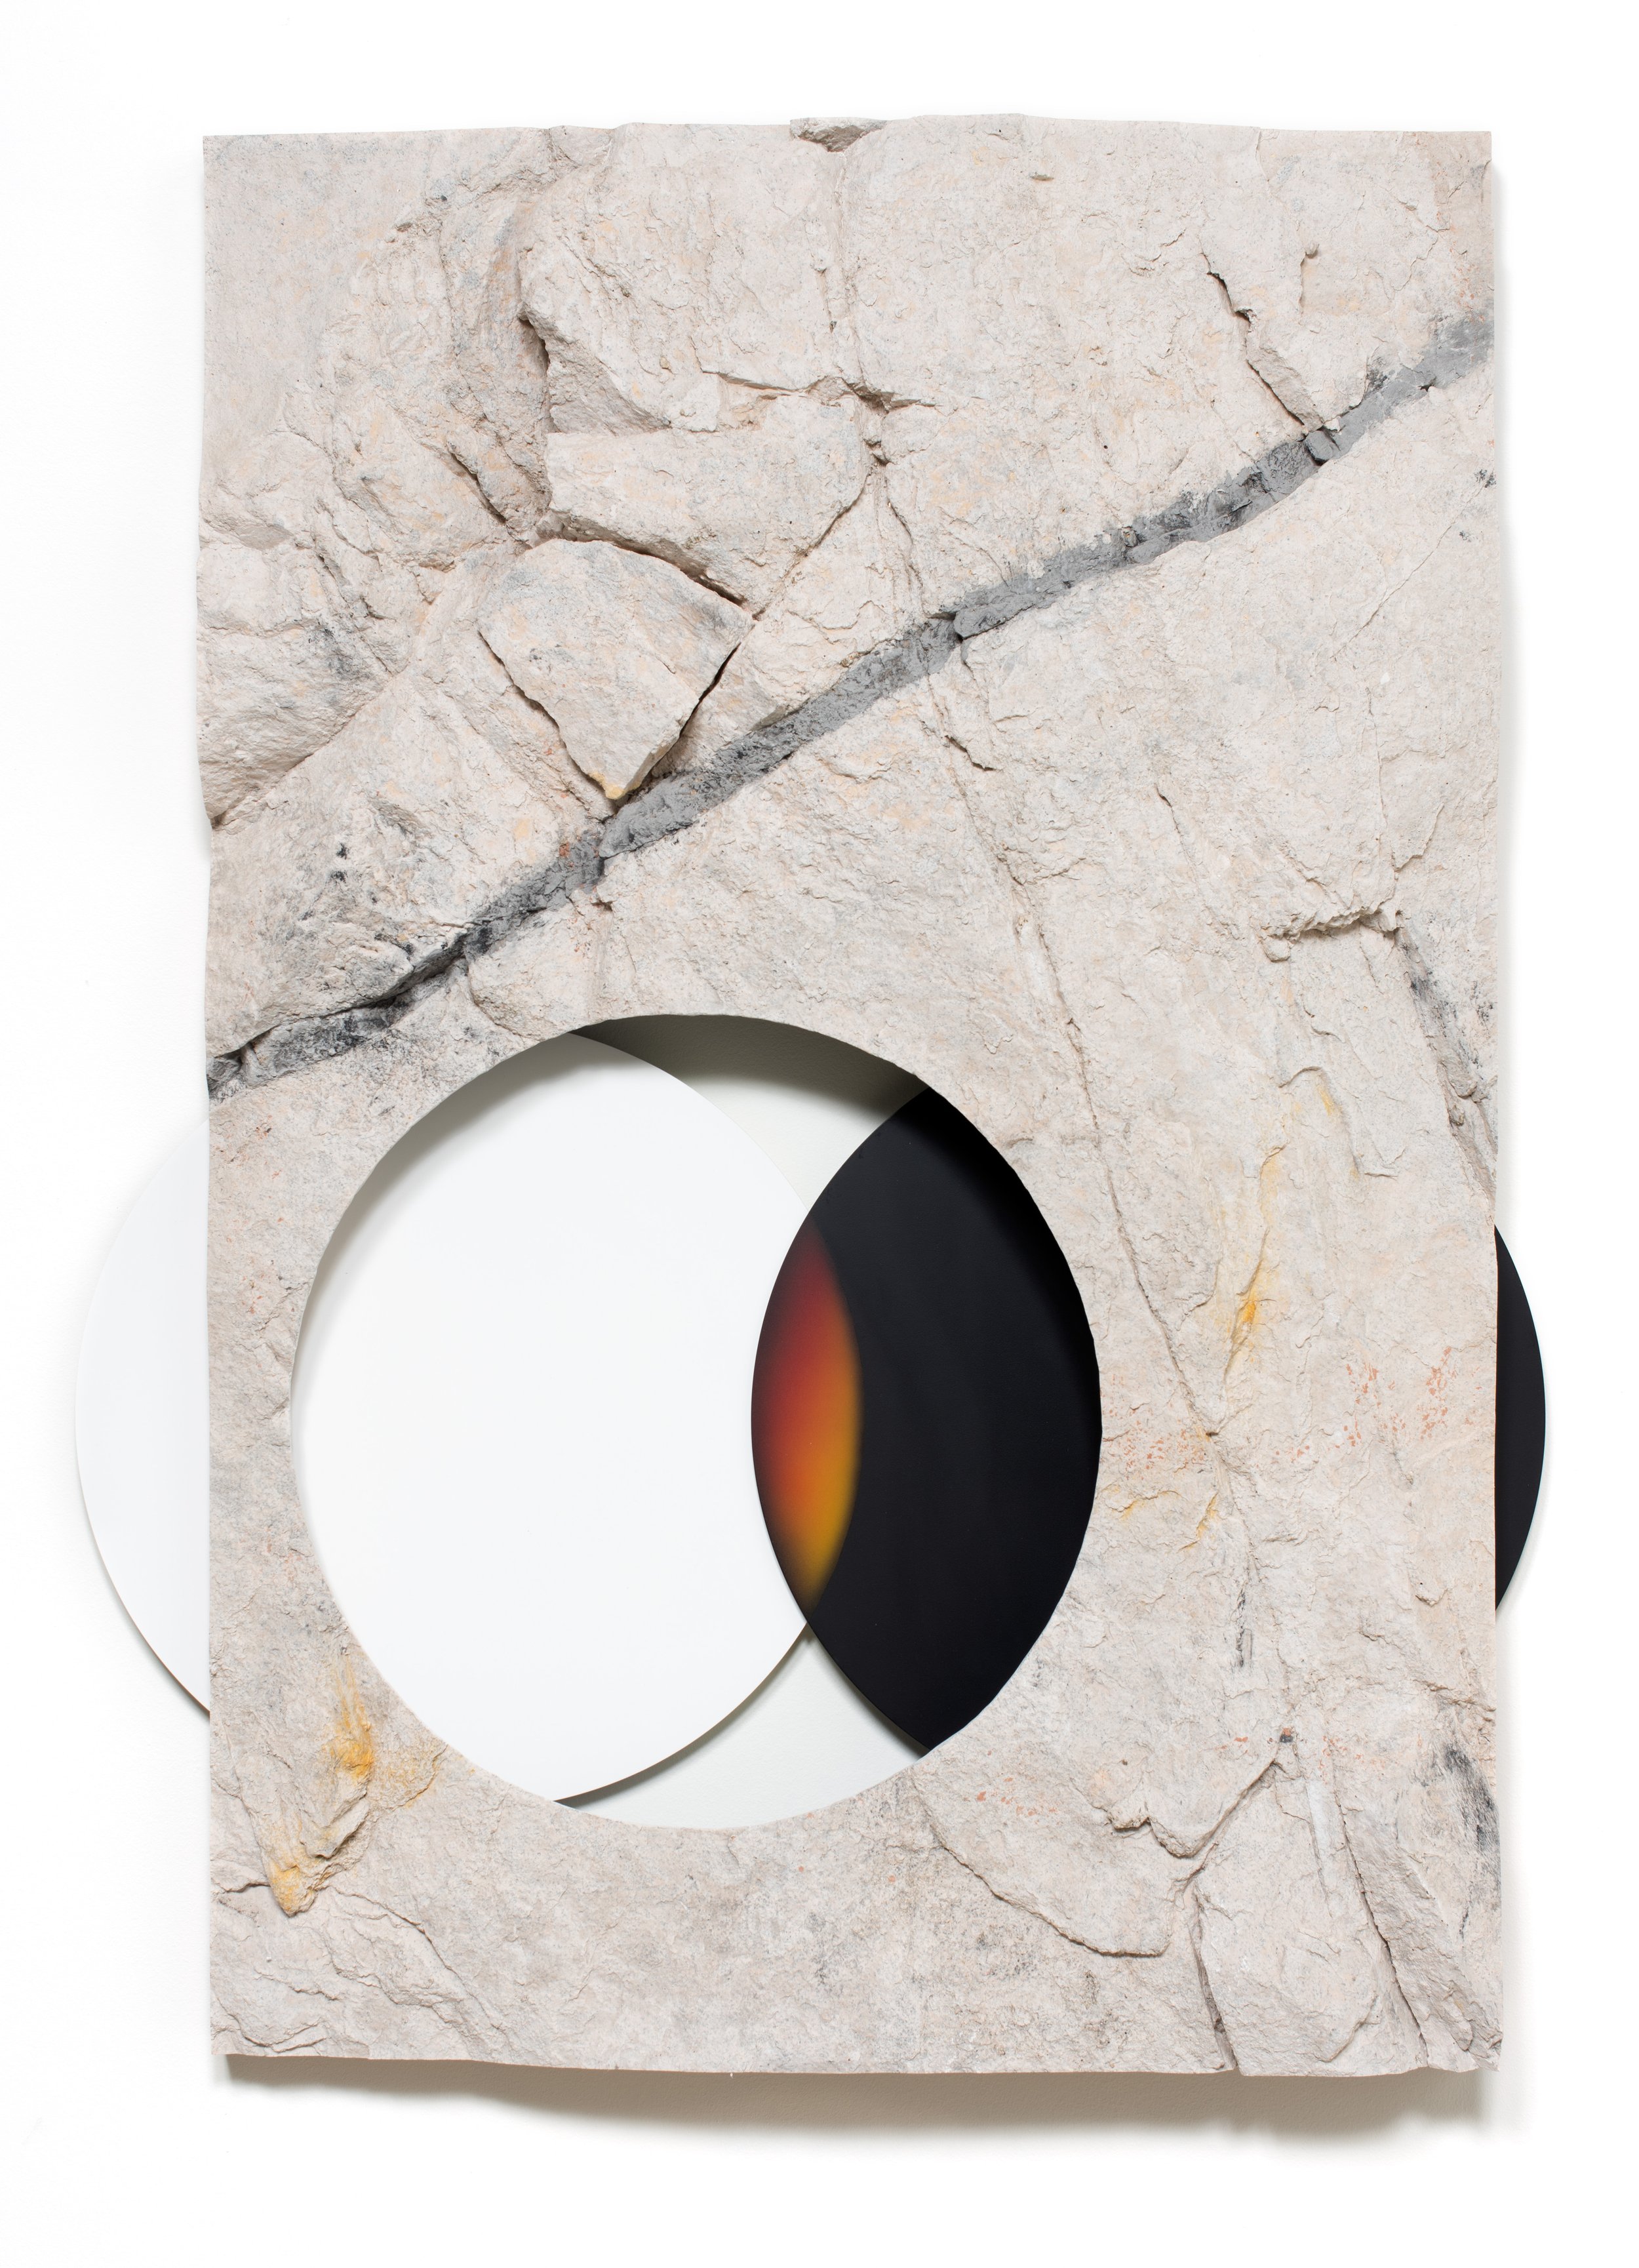   Internal Clock , 2020&nbsp; Acrylic, natural pigments, granite dust, aluminum, and wood&nbsp; 48 x 37 x 4 3/4 inches&nbsp; 